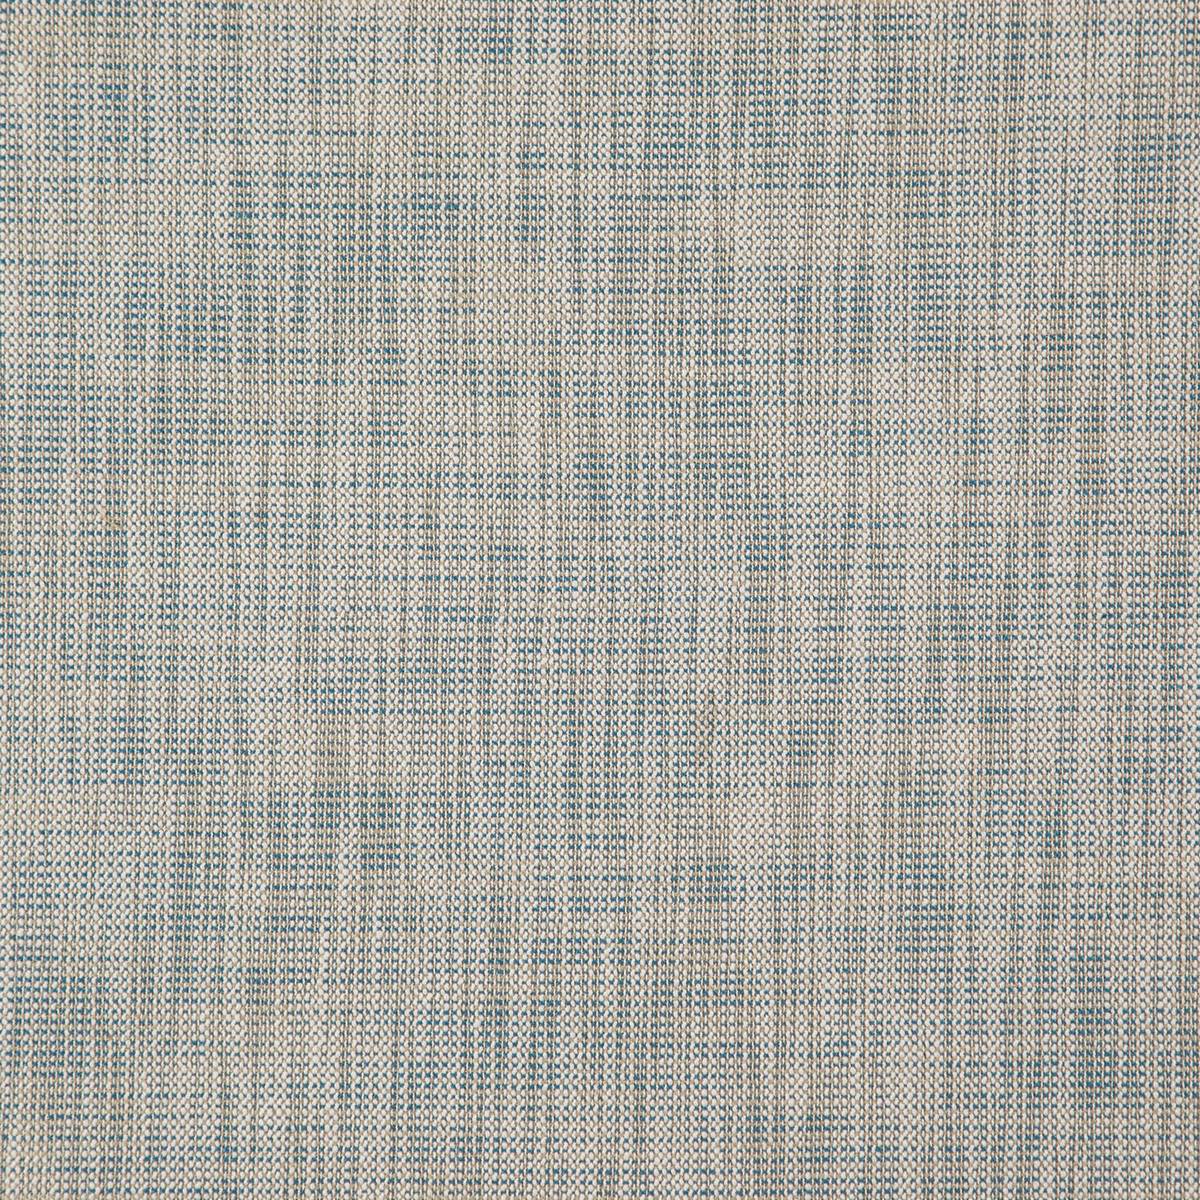 Levens Aqua Fabric by Sanderson